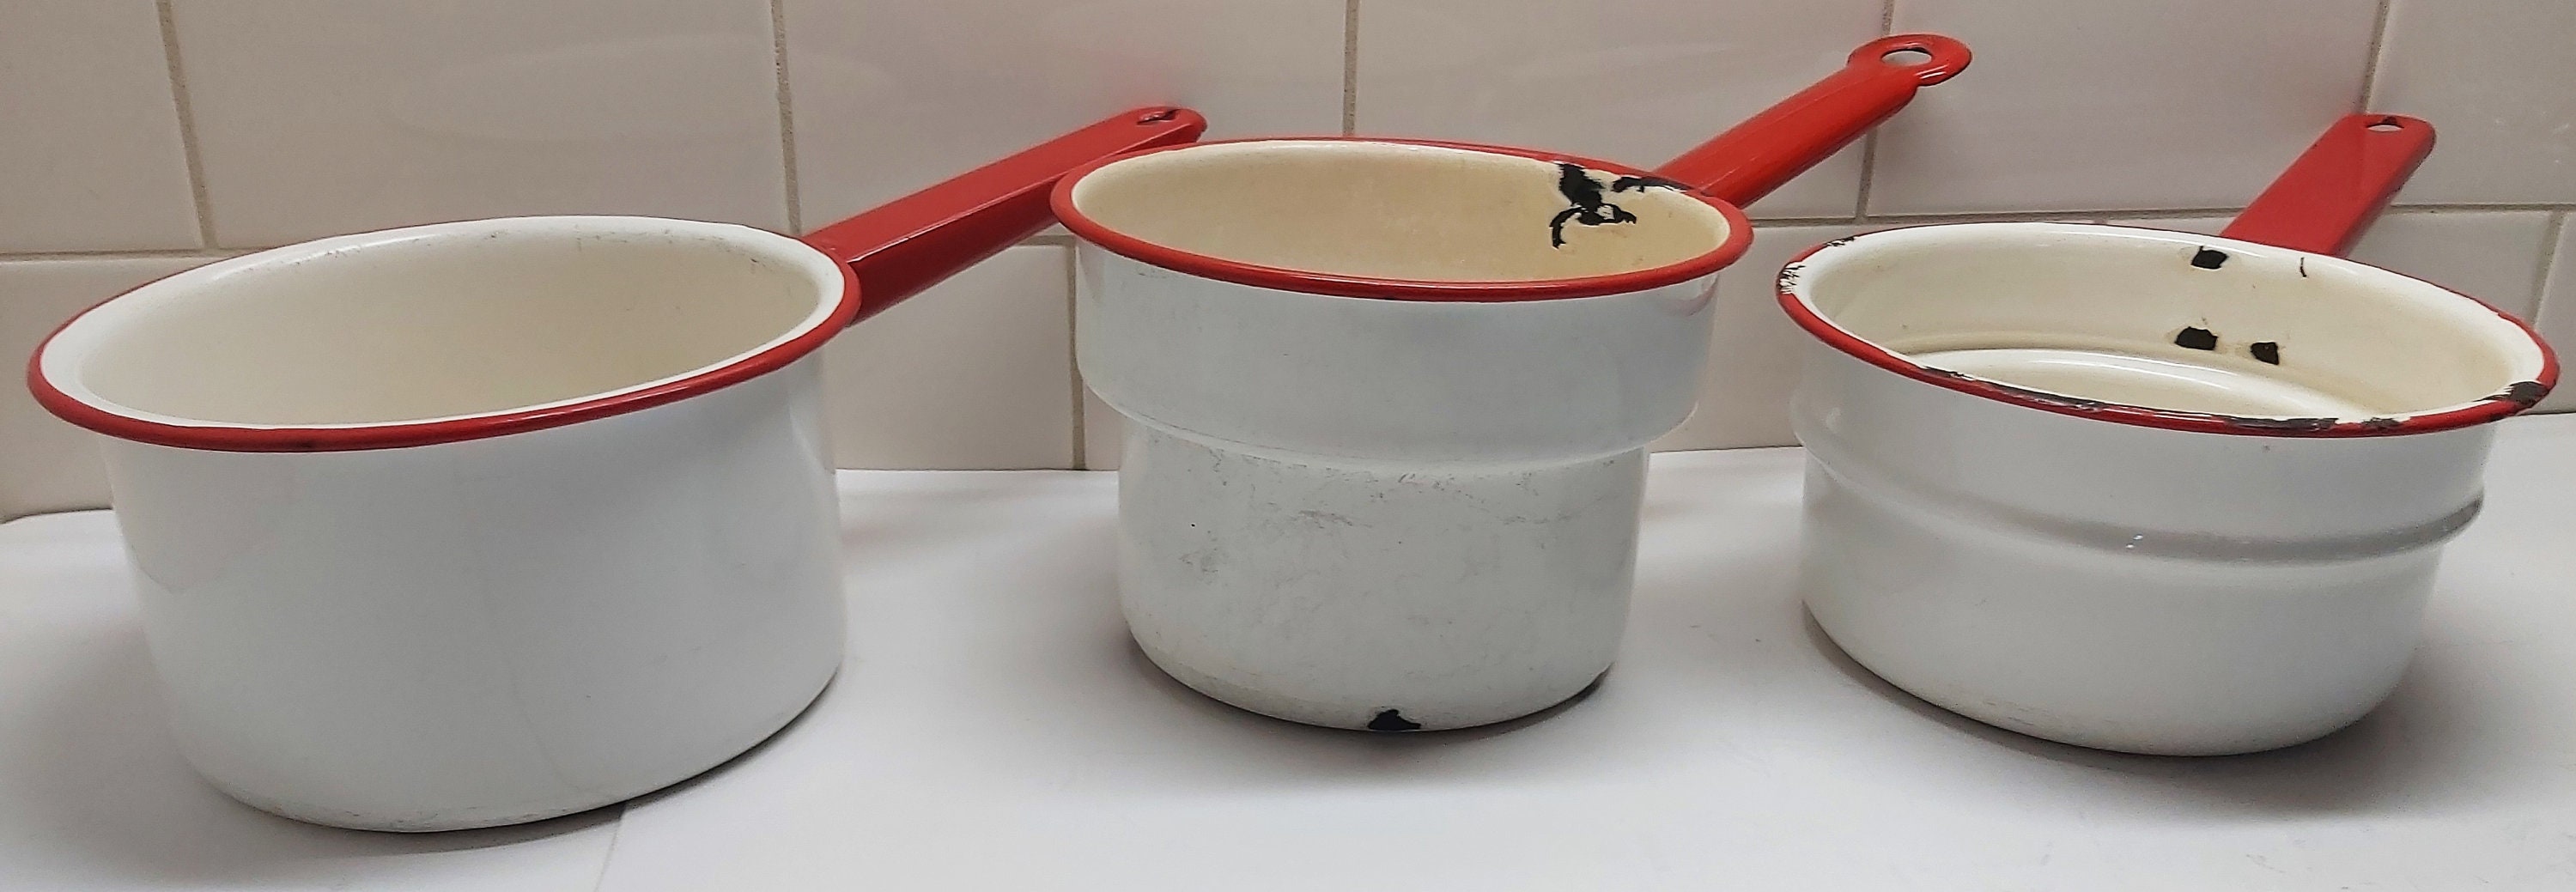 Vintage Berggen Enamelware Small Double Boiler Cookware Pot/Pan